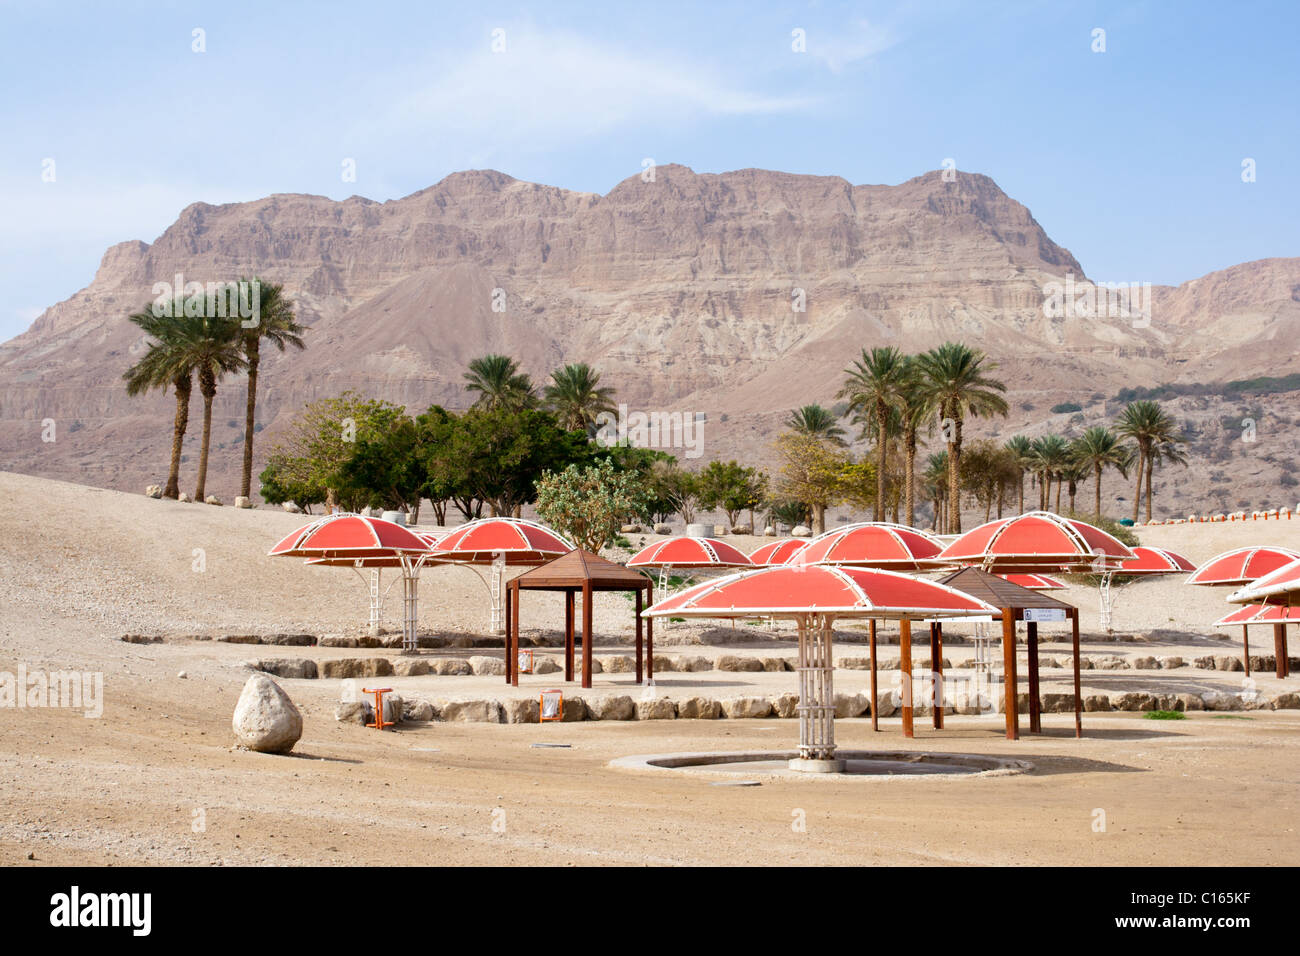 Ein Gedi oase at the Dead Sea. Israel Stock Photo